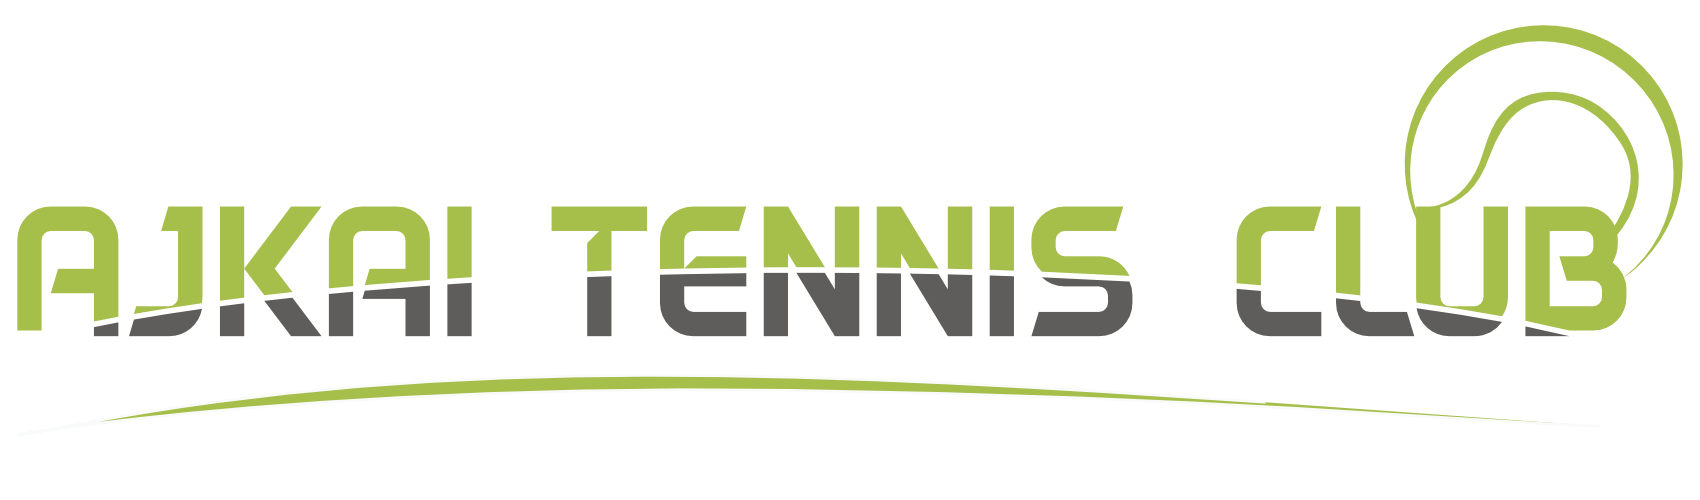 Ajkai Tennis Club Logo